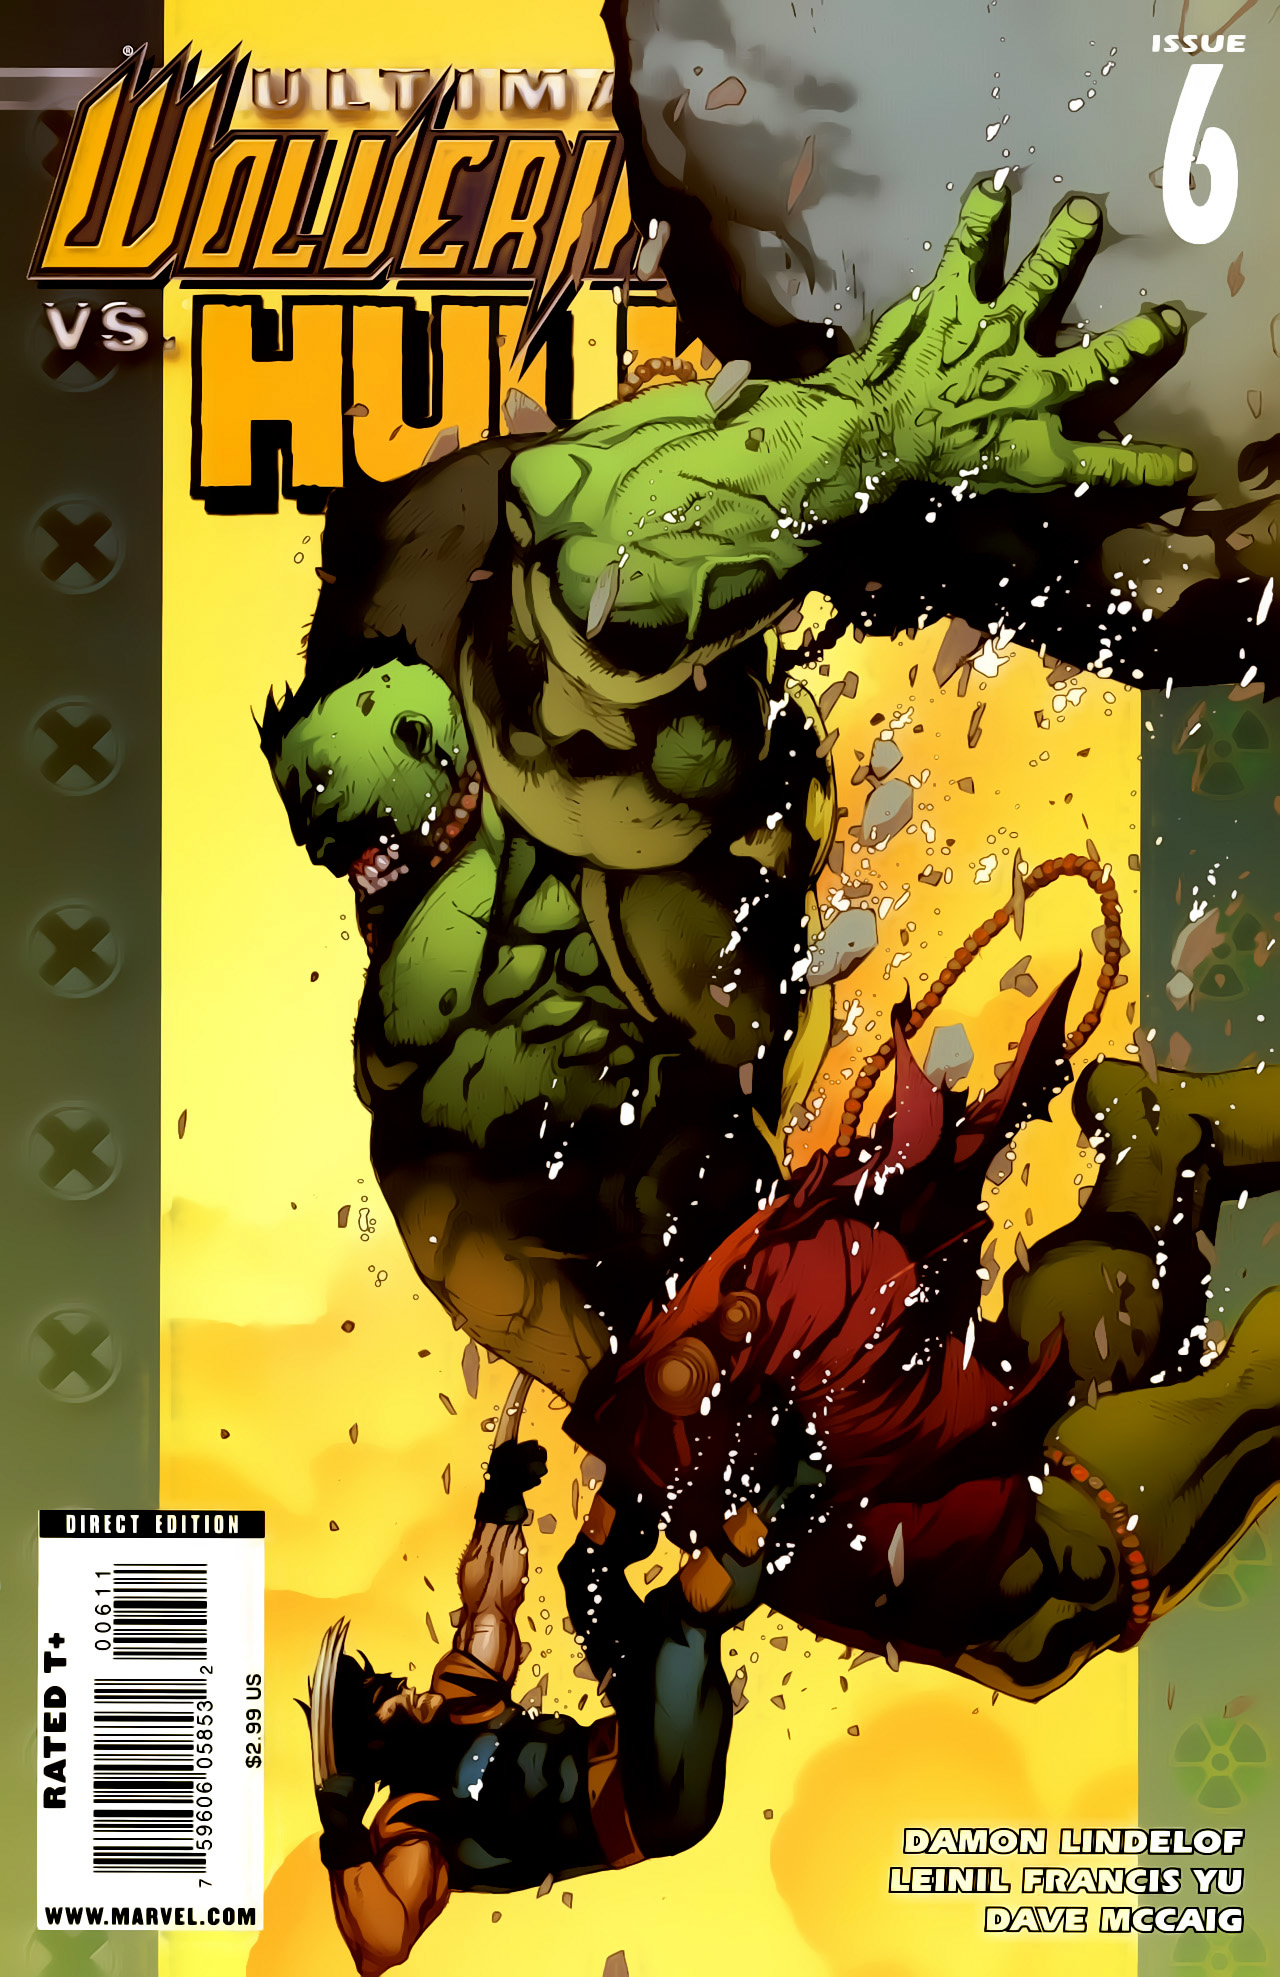 Read online Ultimate Wolverine vs. Hulk comic -  Issue #6 - 1